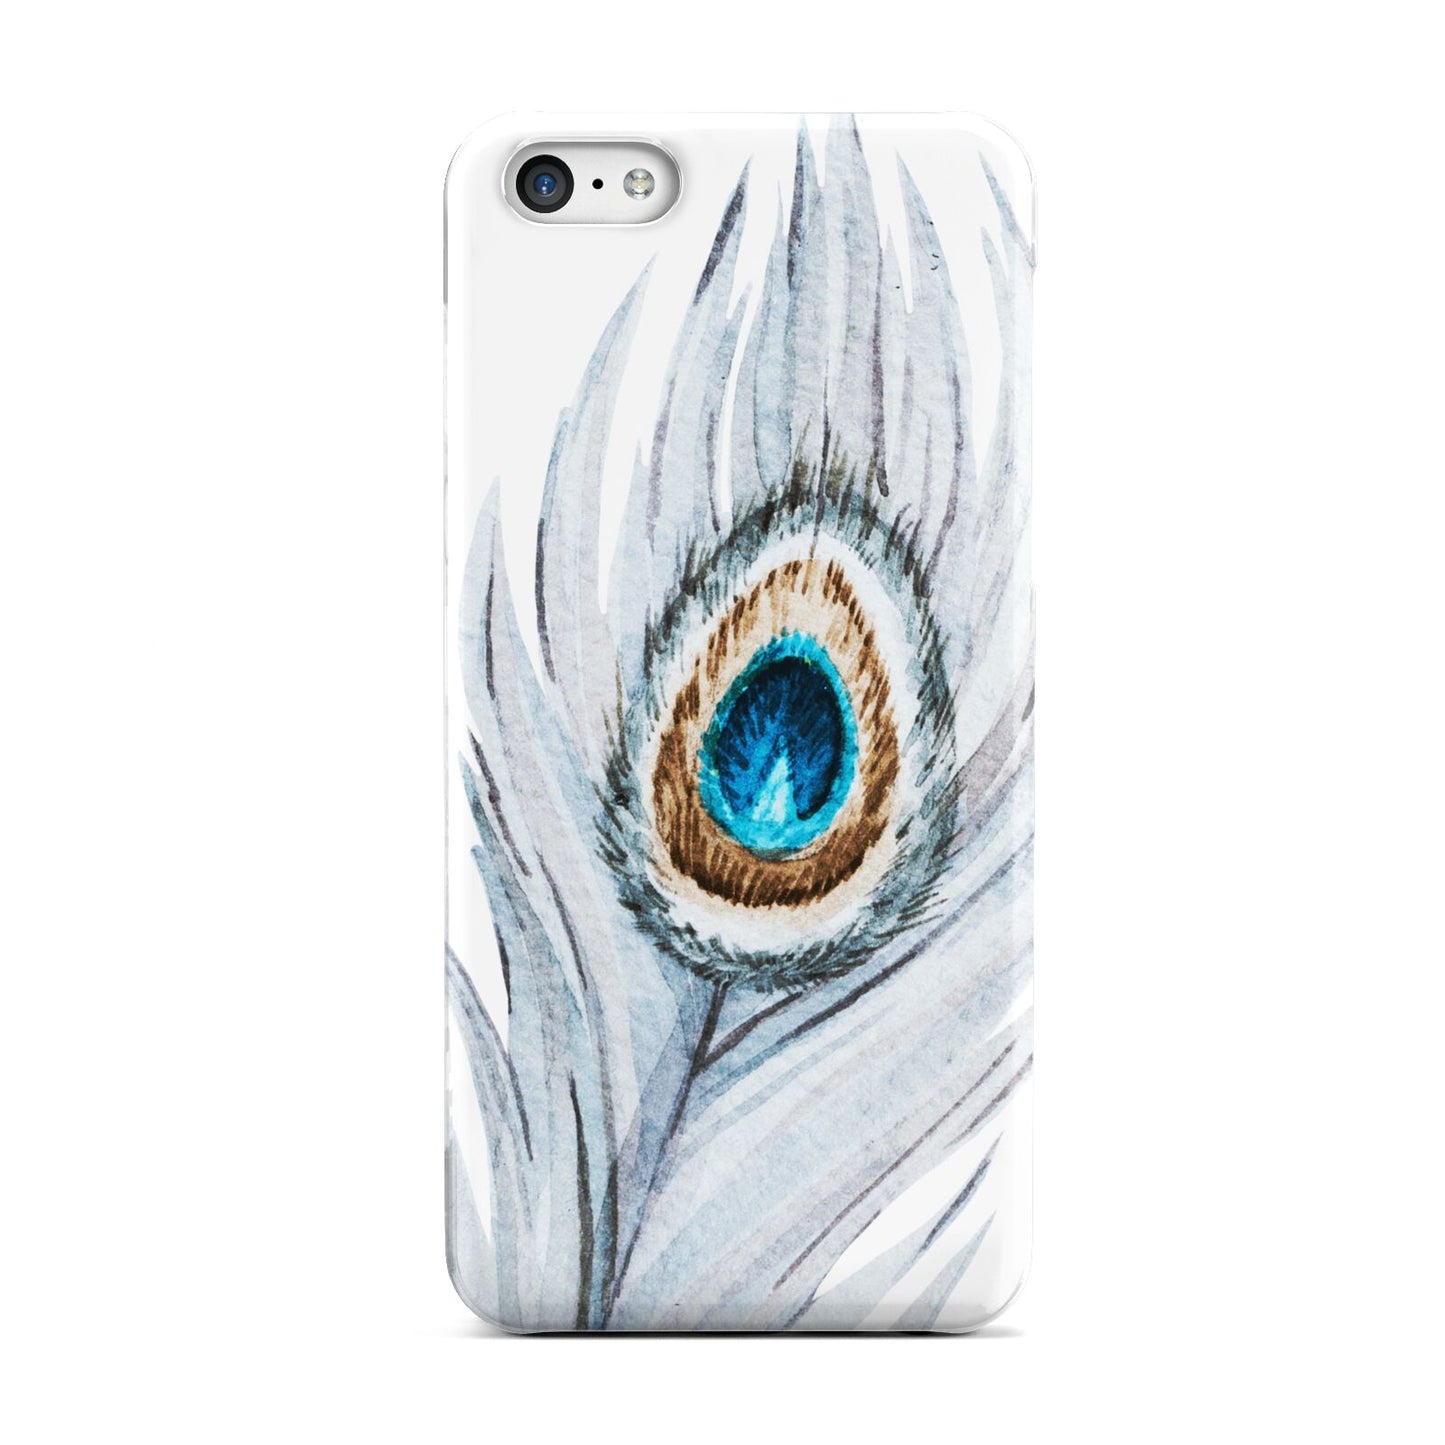 Peacock Apple iPhone 5c Case